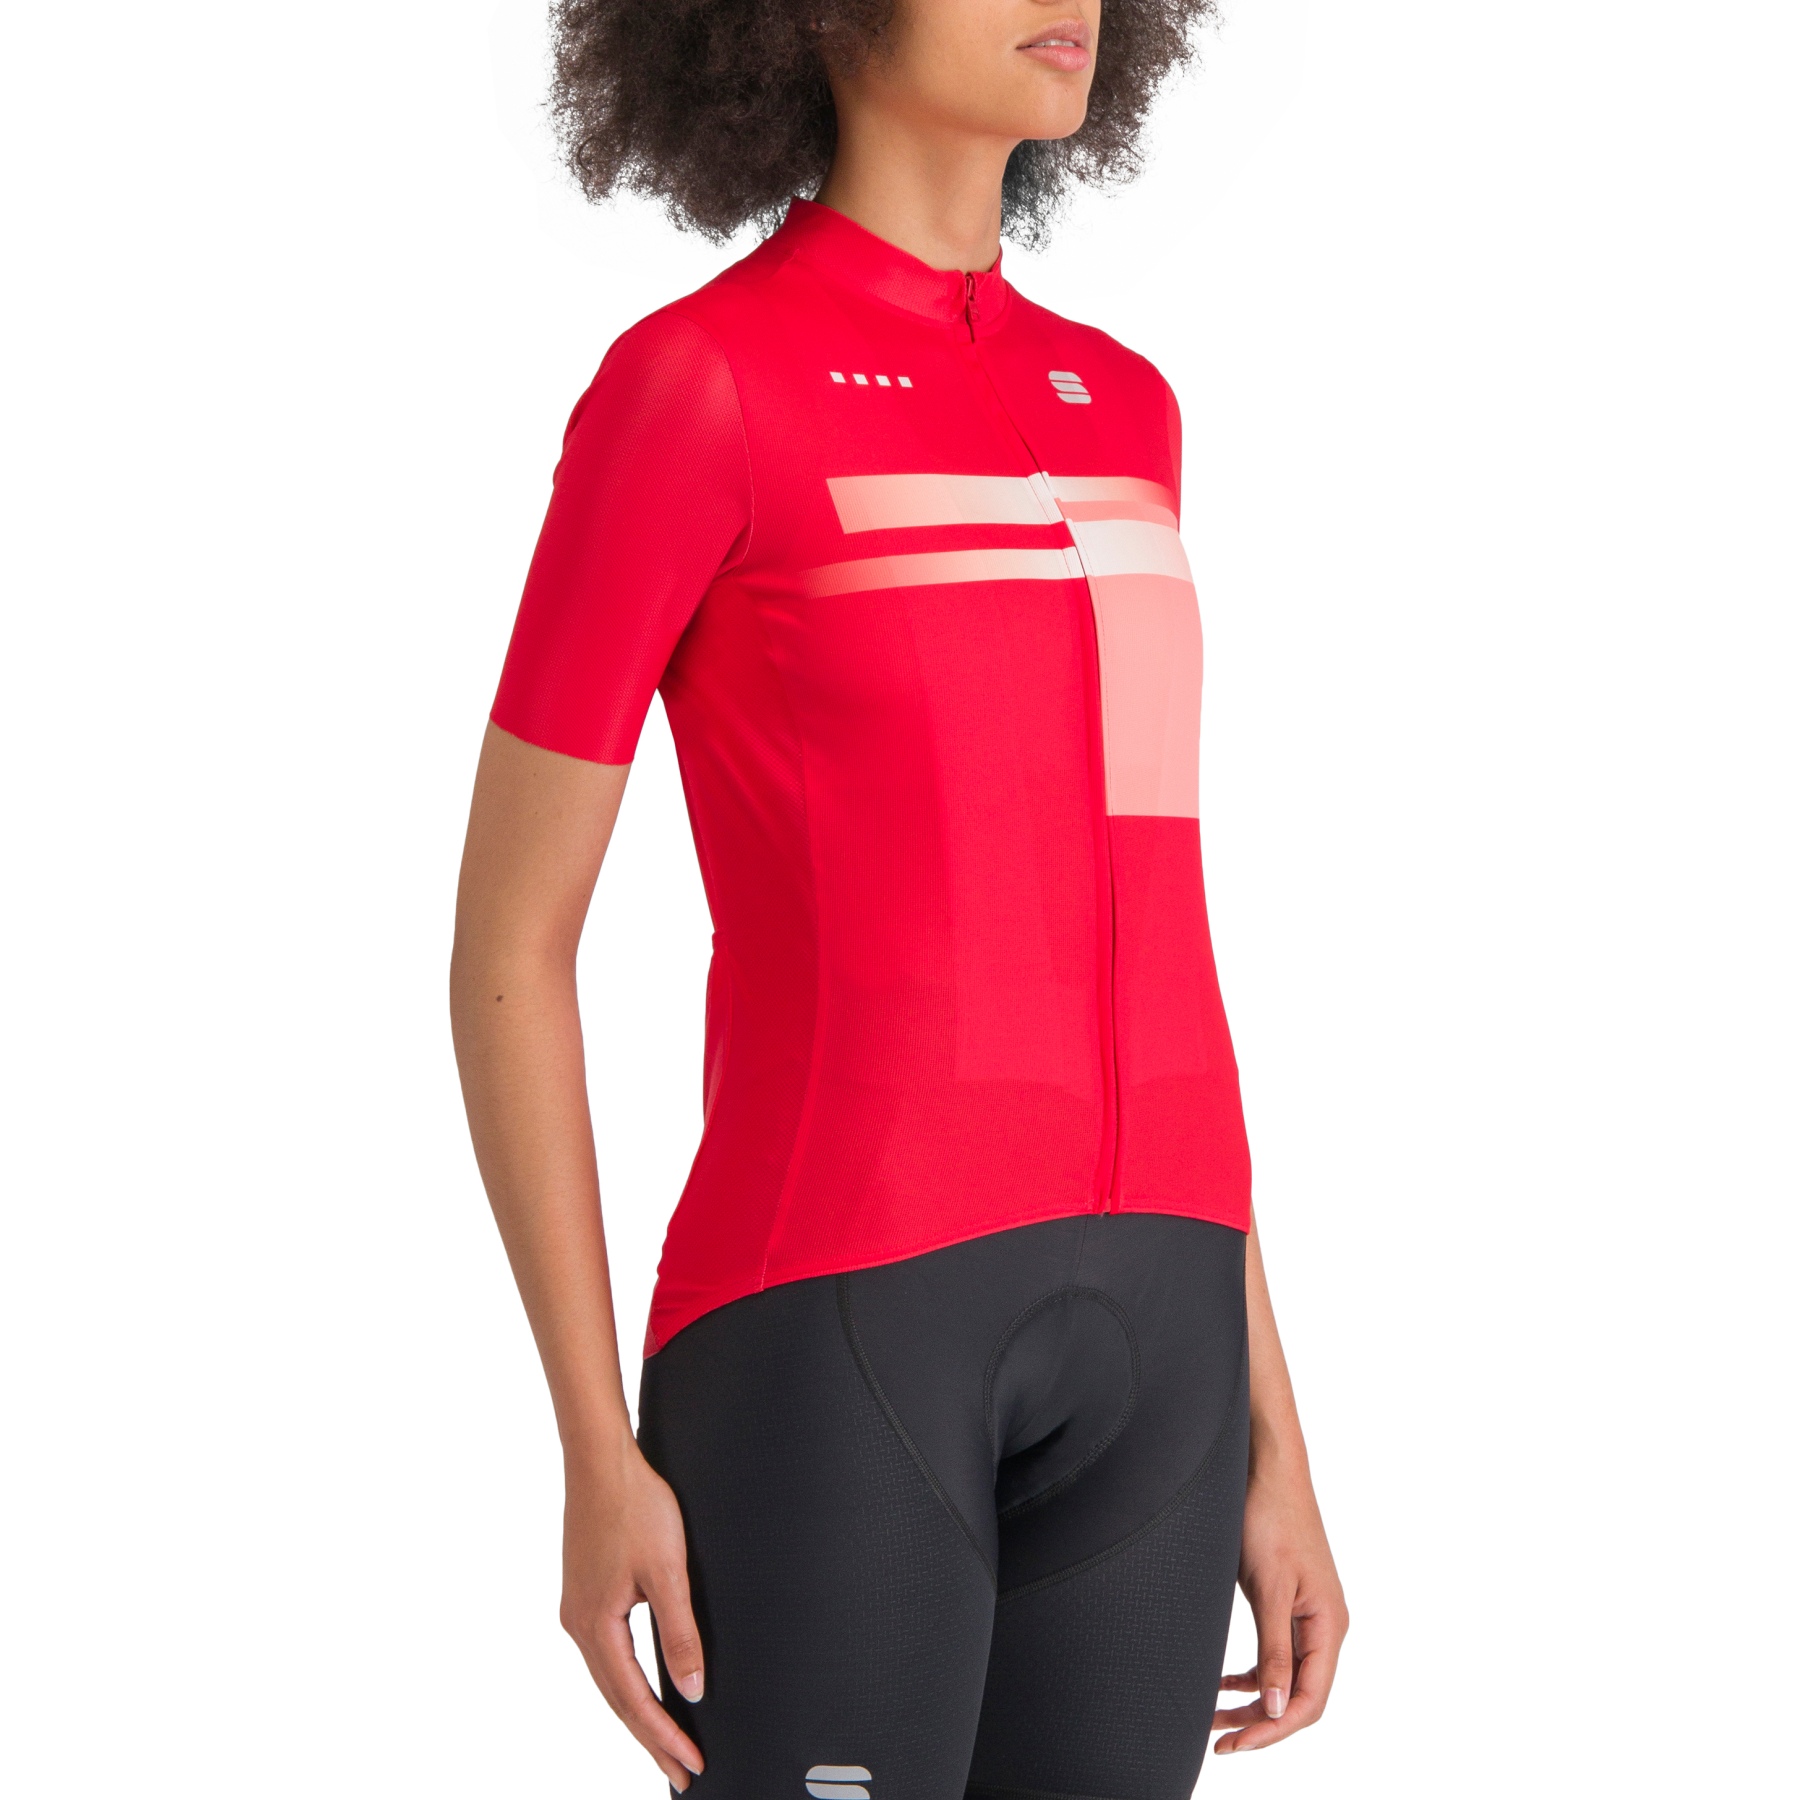 Productfoto van Sportful Gruppetto Fietsshirt Dames - 638 Tango Red Pink